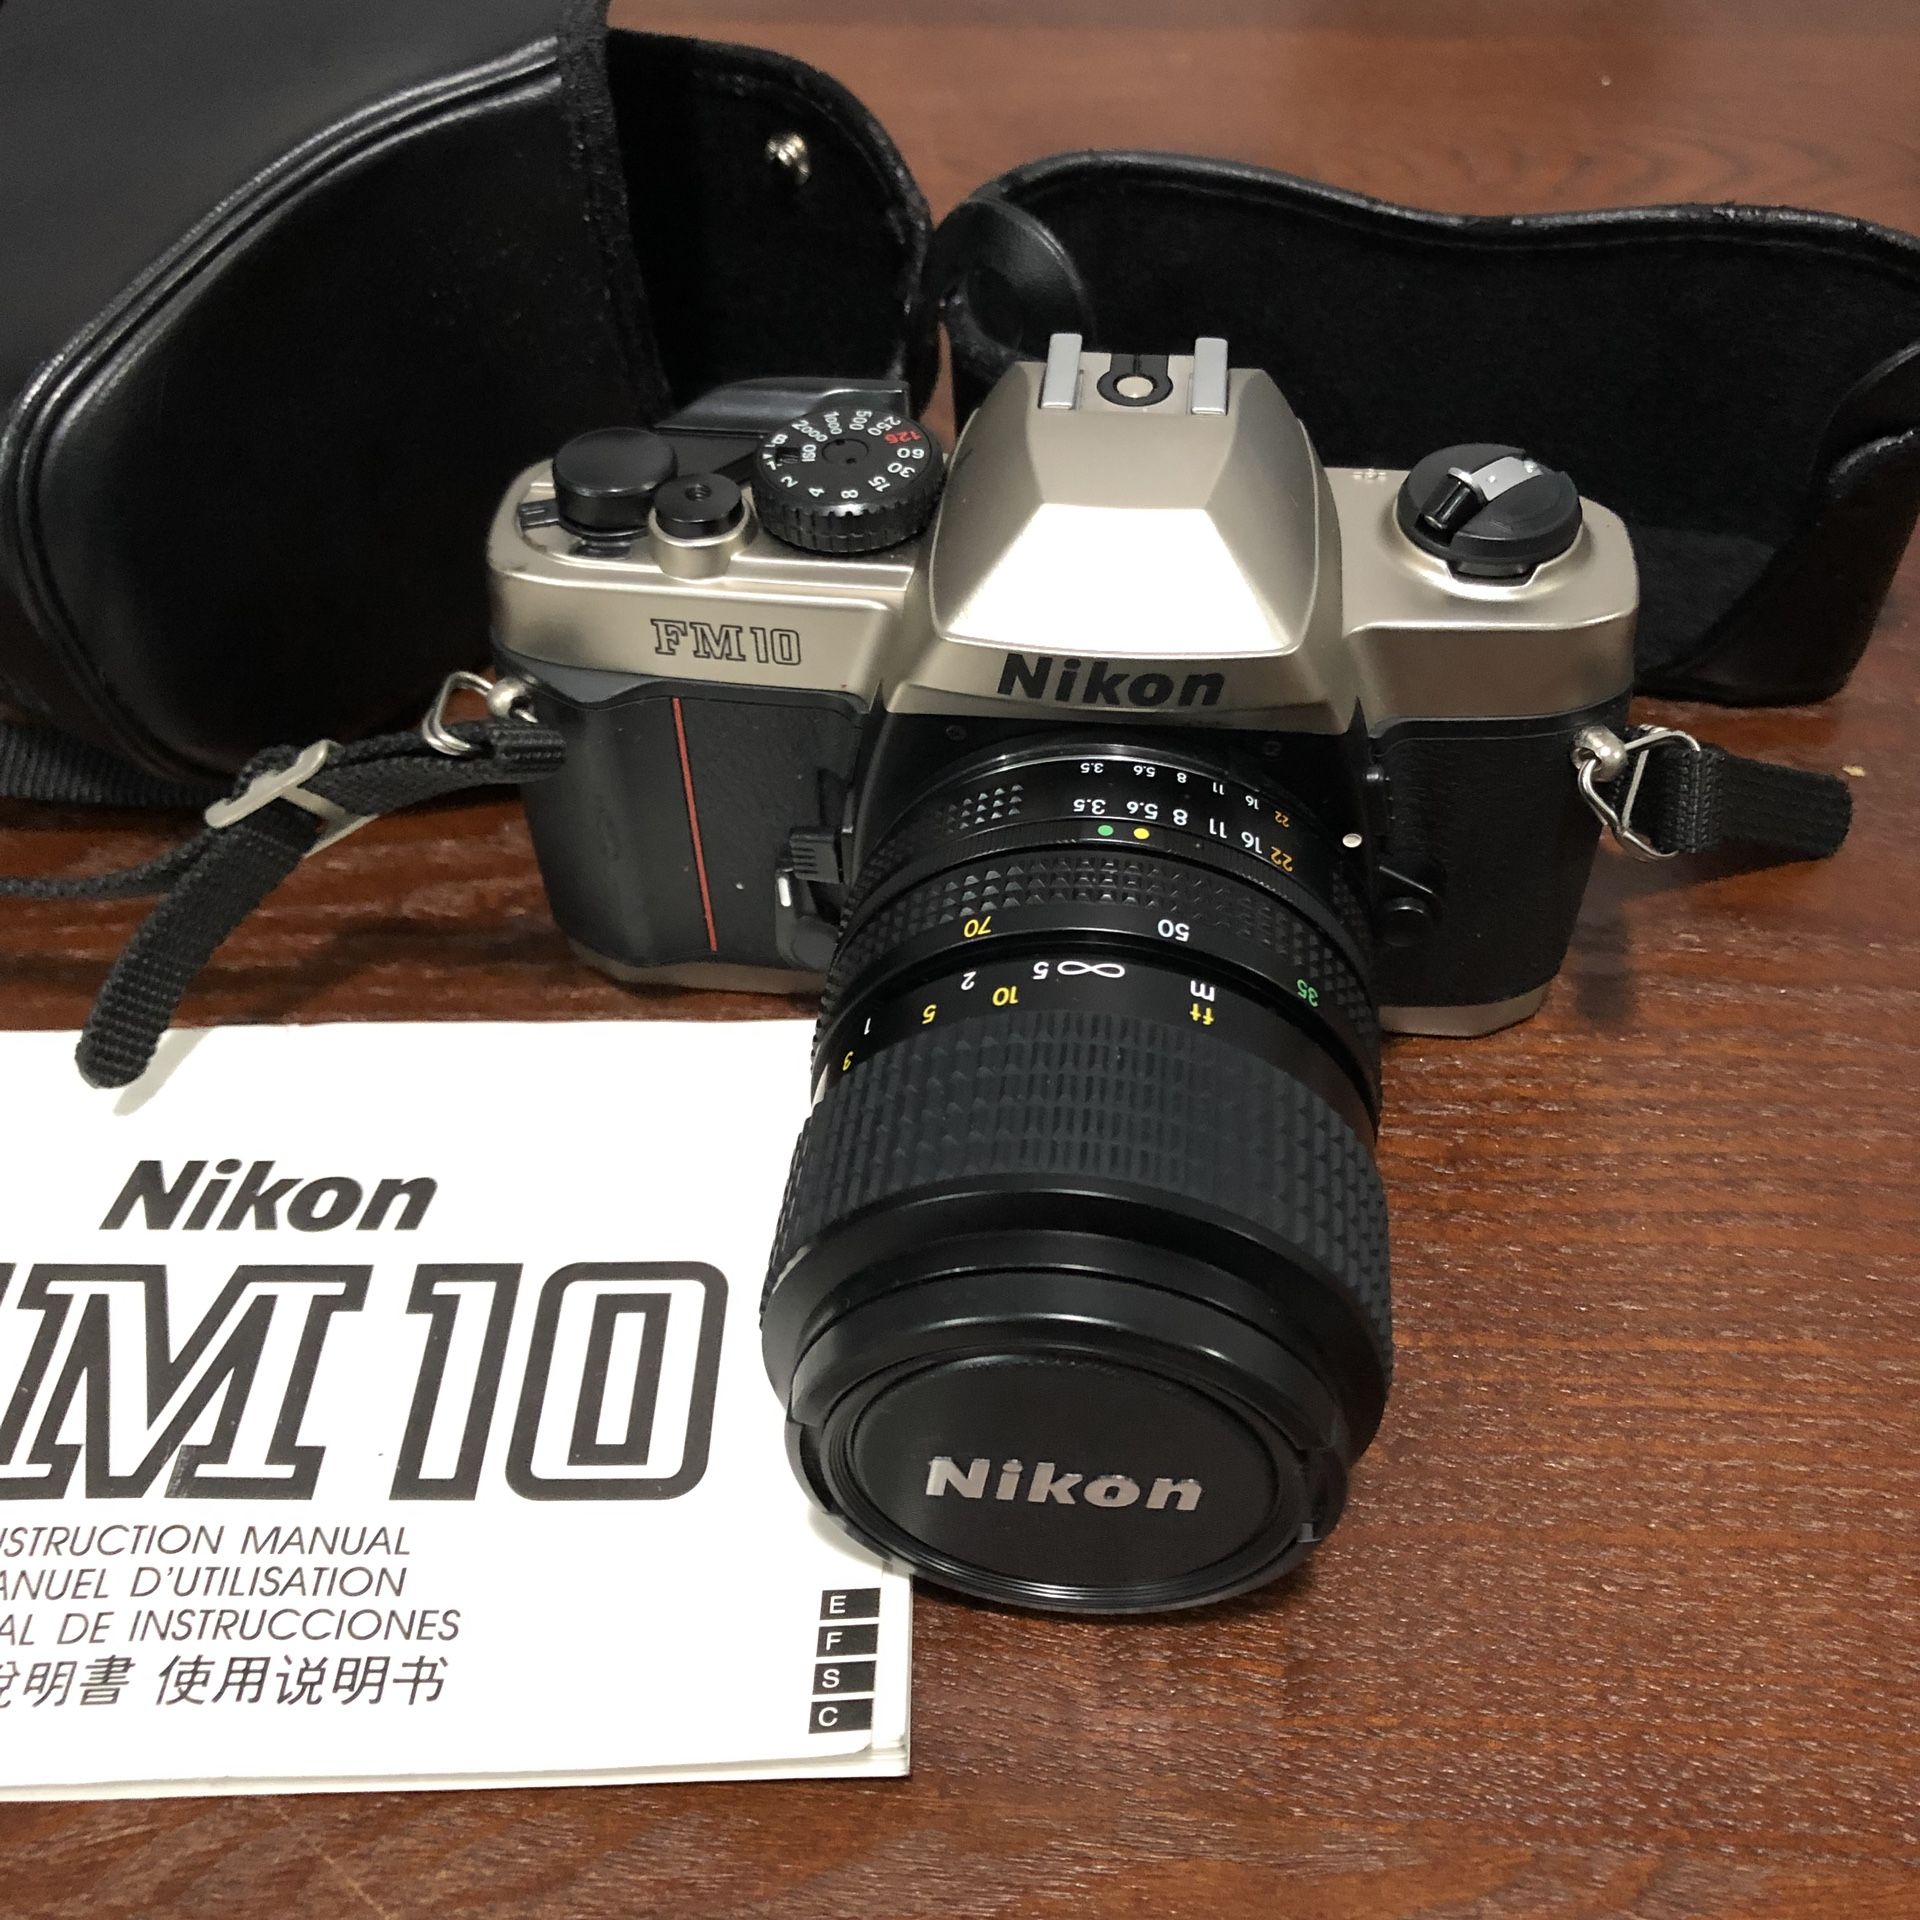 Nikon FM-10 35mm SLR Camera Kit with 35-70mm F3.5-4.8 Zoom Lens & Camera Case